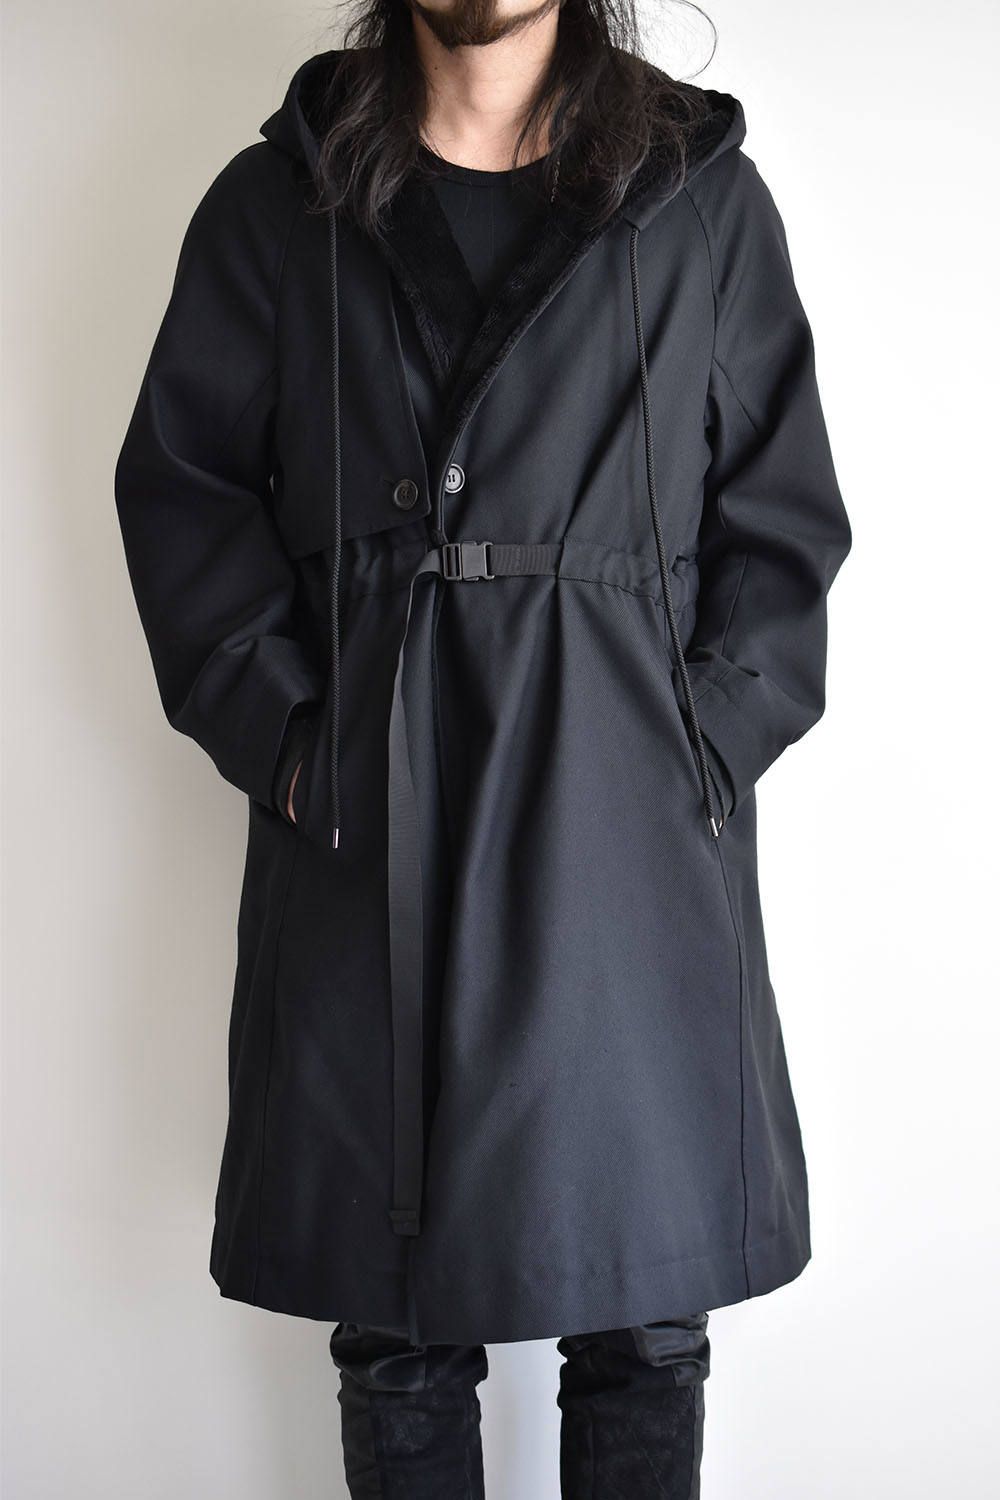 prasthana - Afield Coat